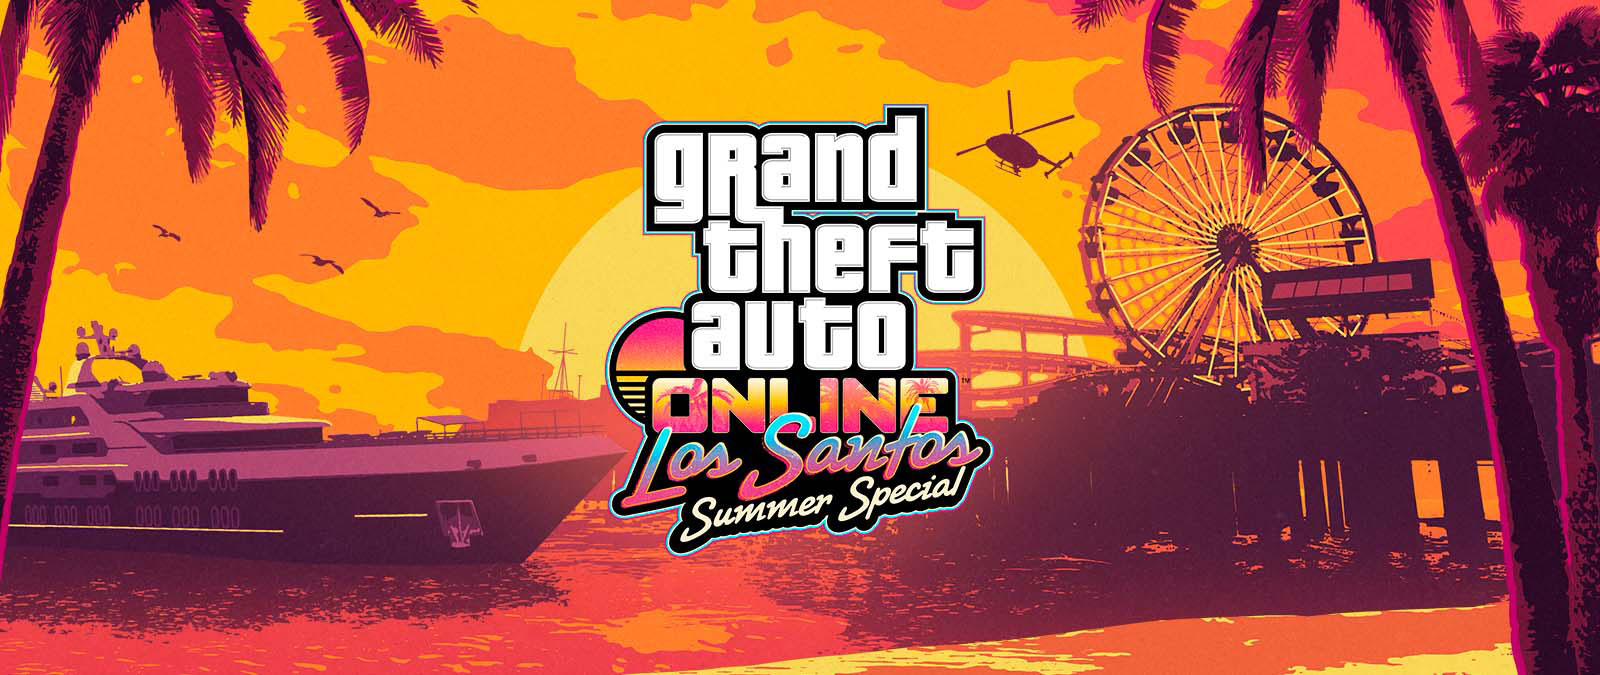 Grand Theft Auto Online. Los Santos Summer Special. 석양 속의 요트, 관람차, 헬리콥터